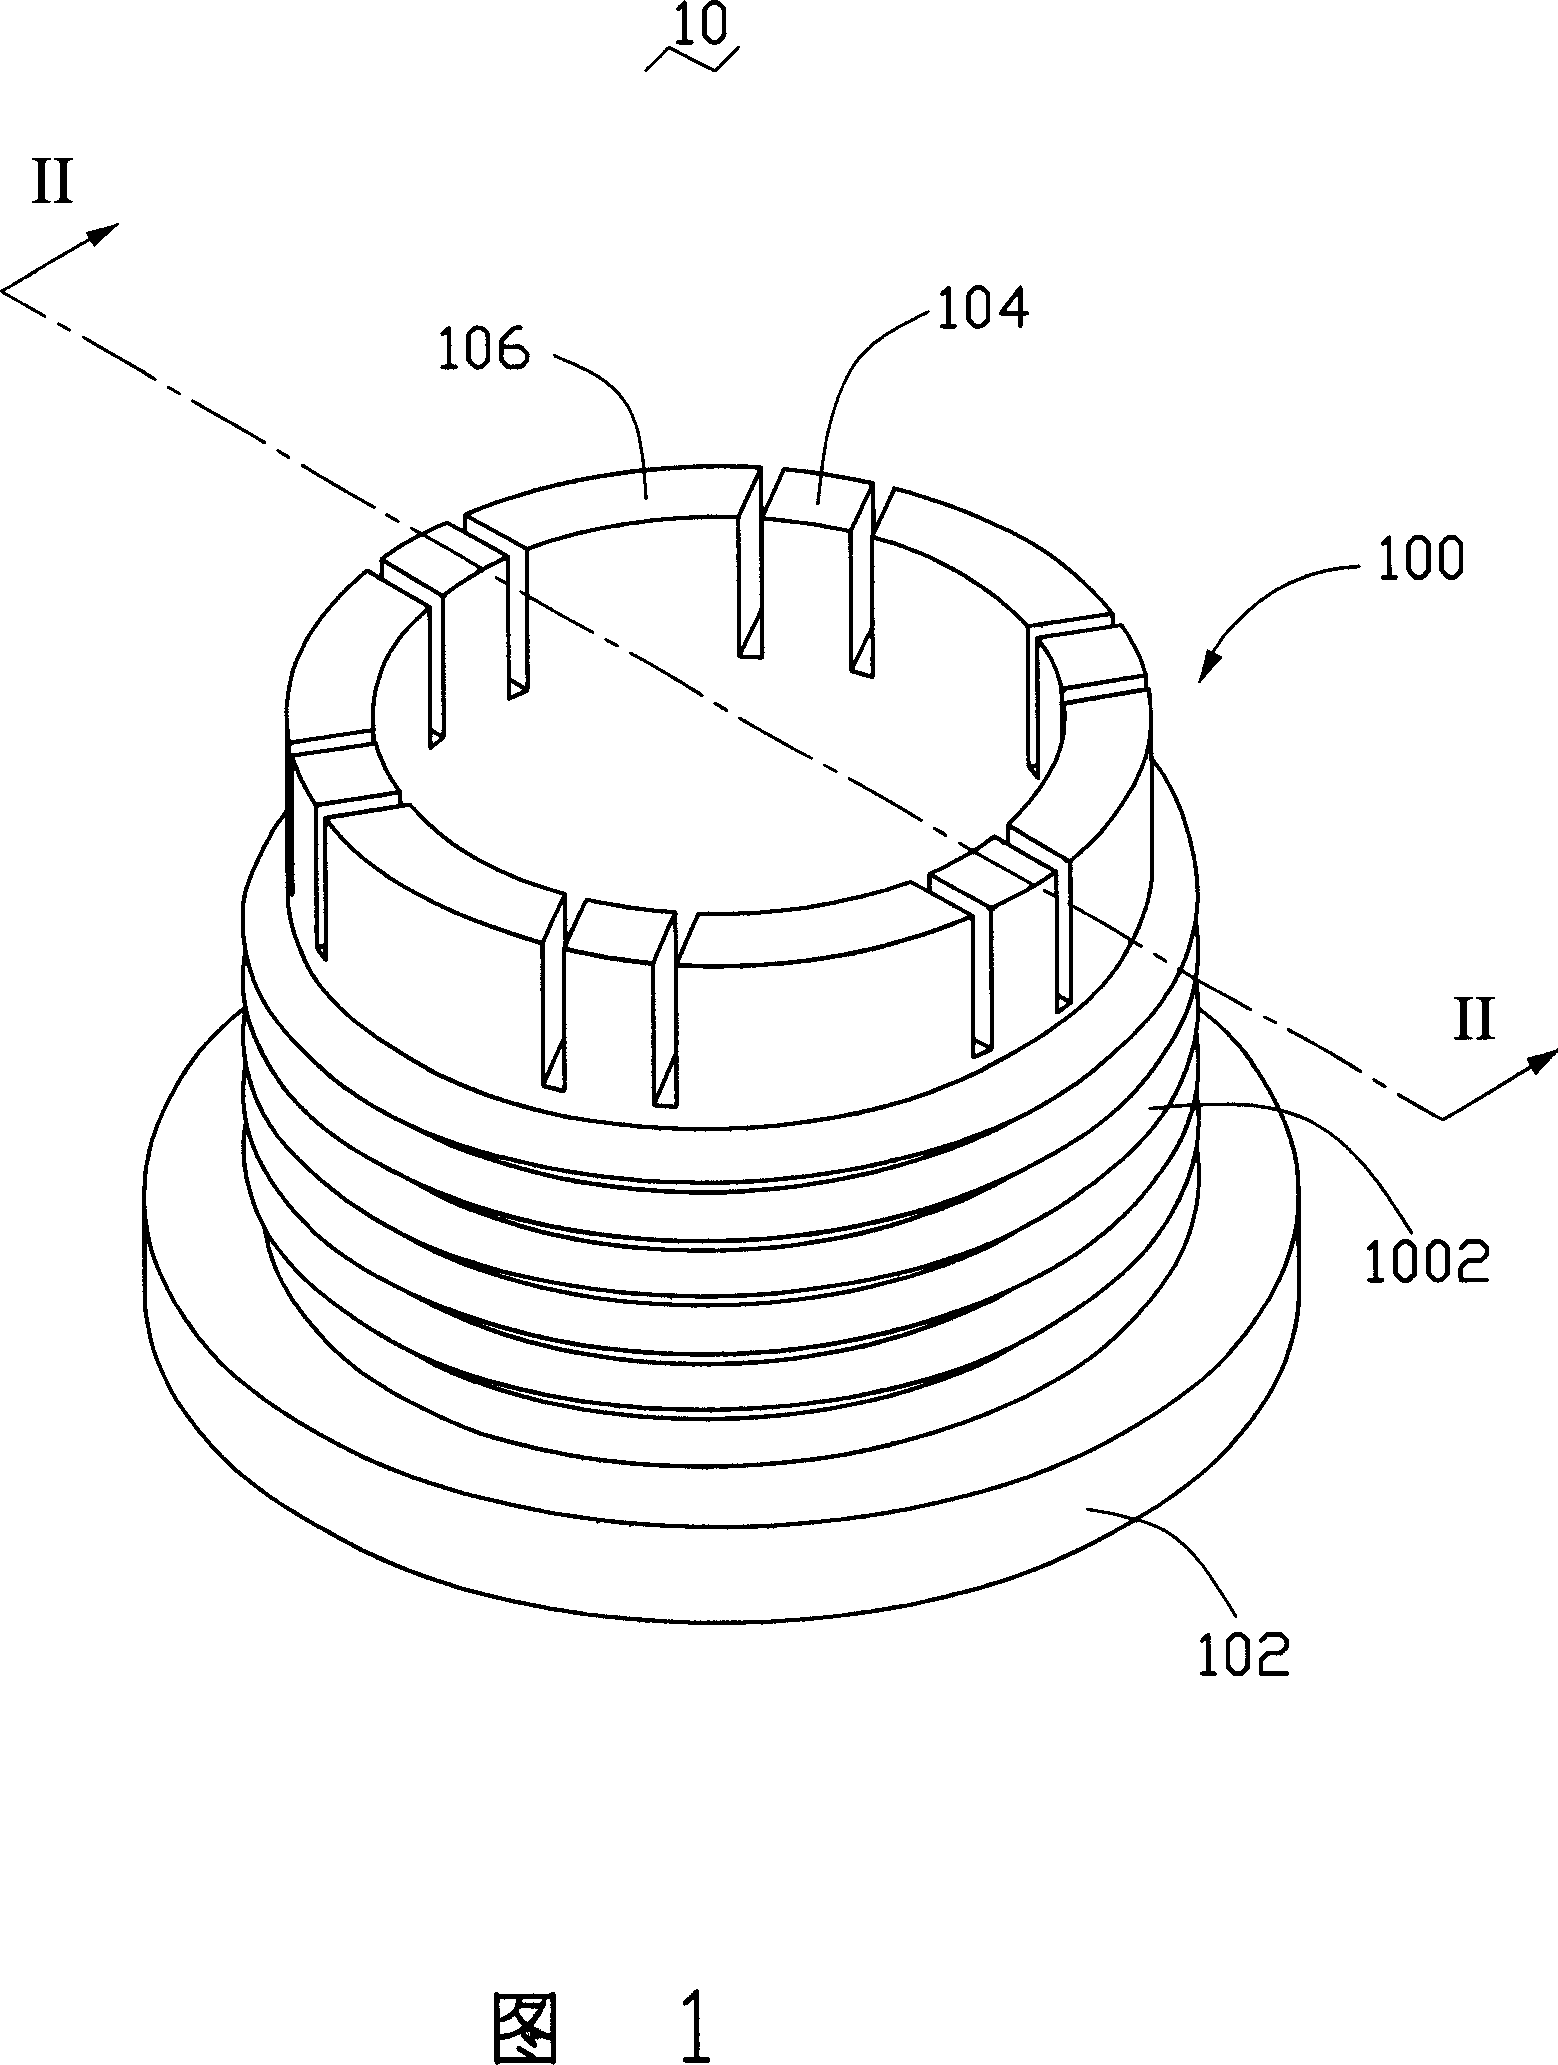 Lens barrel and lens module using same